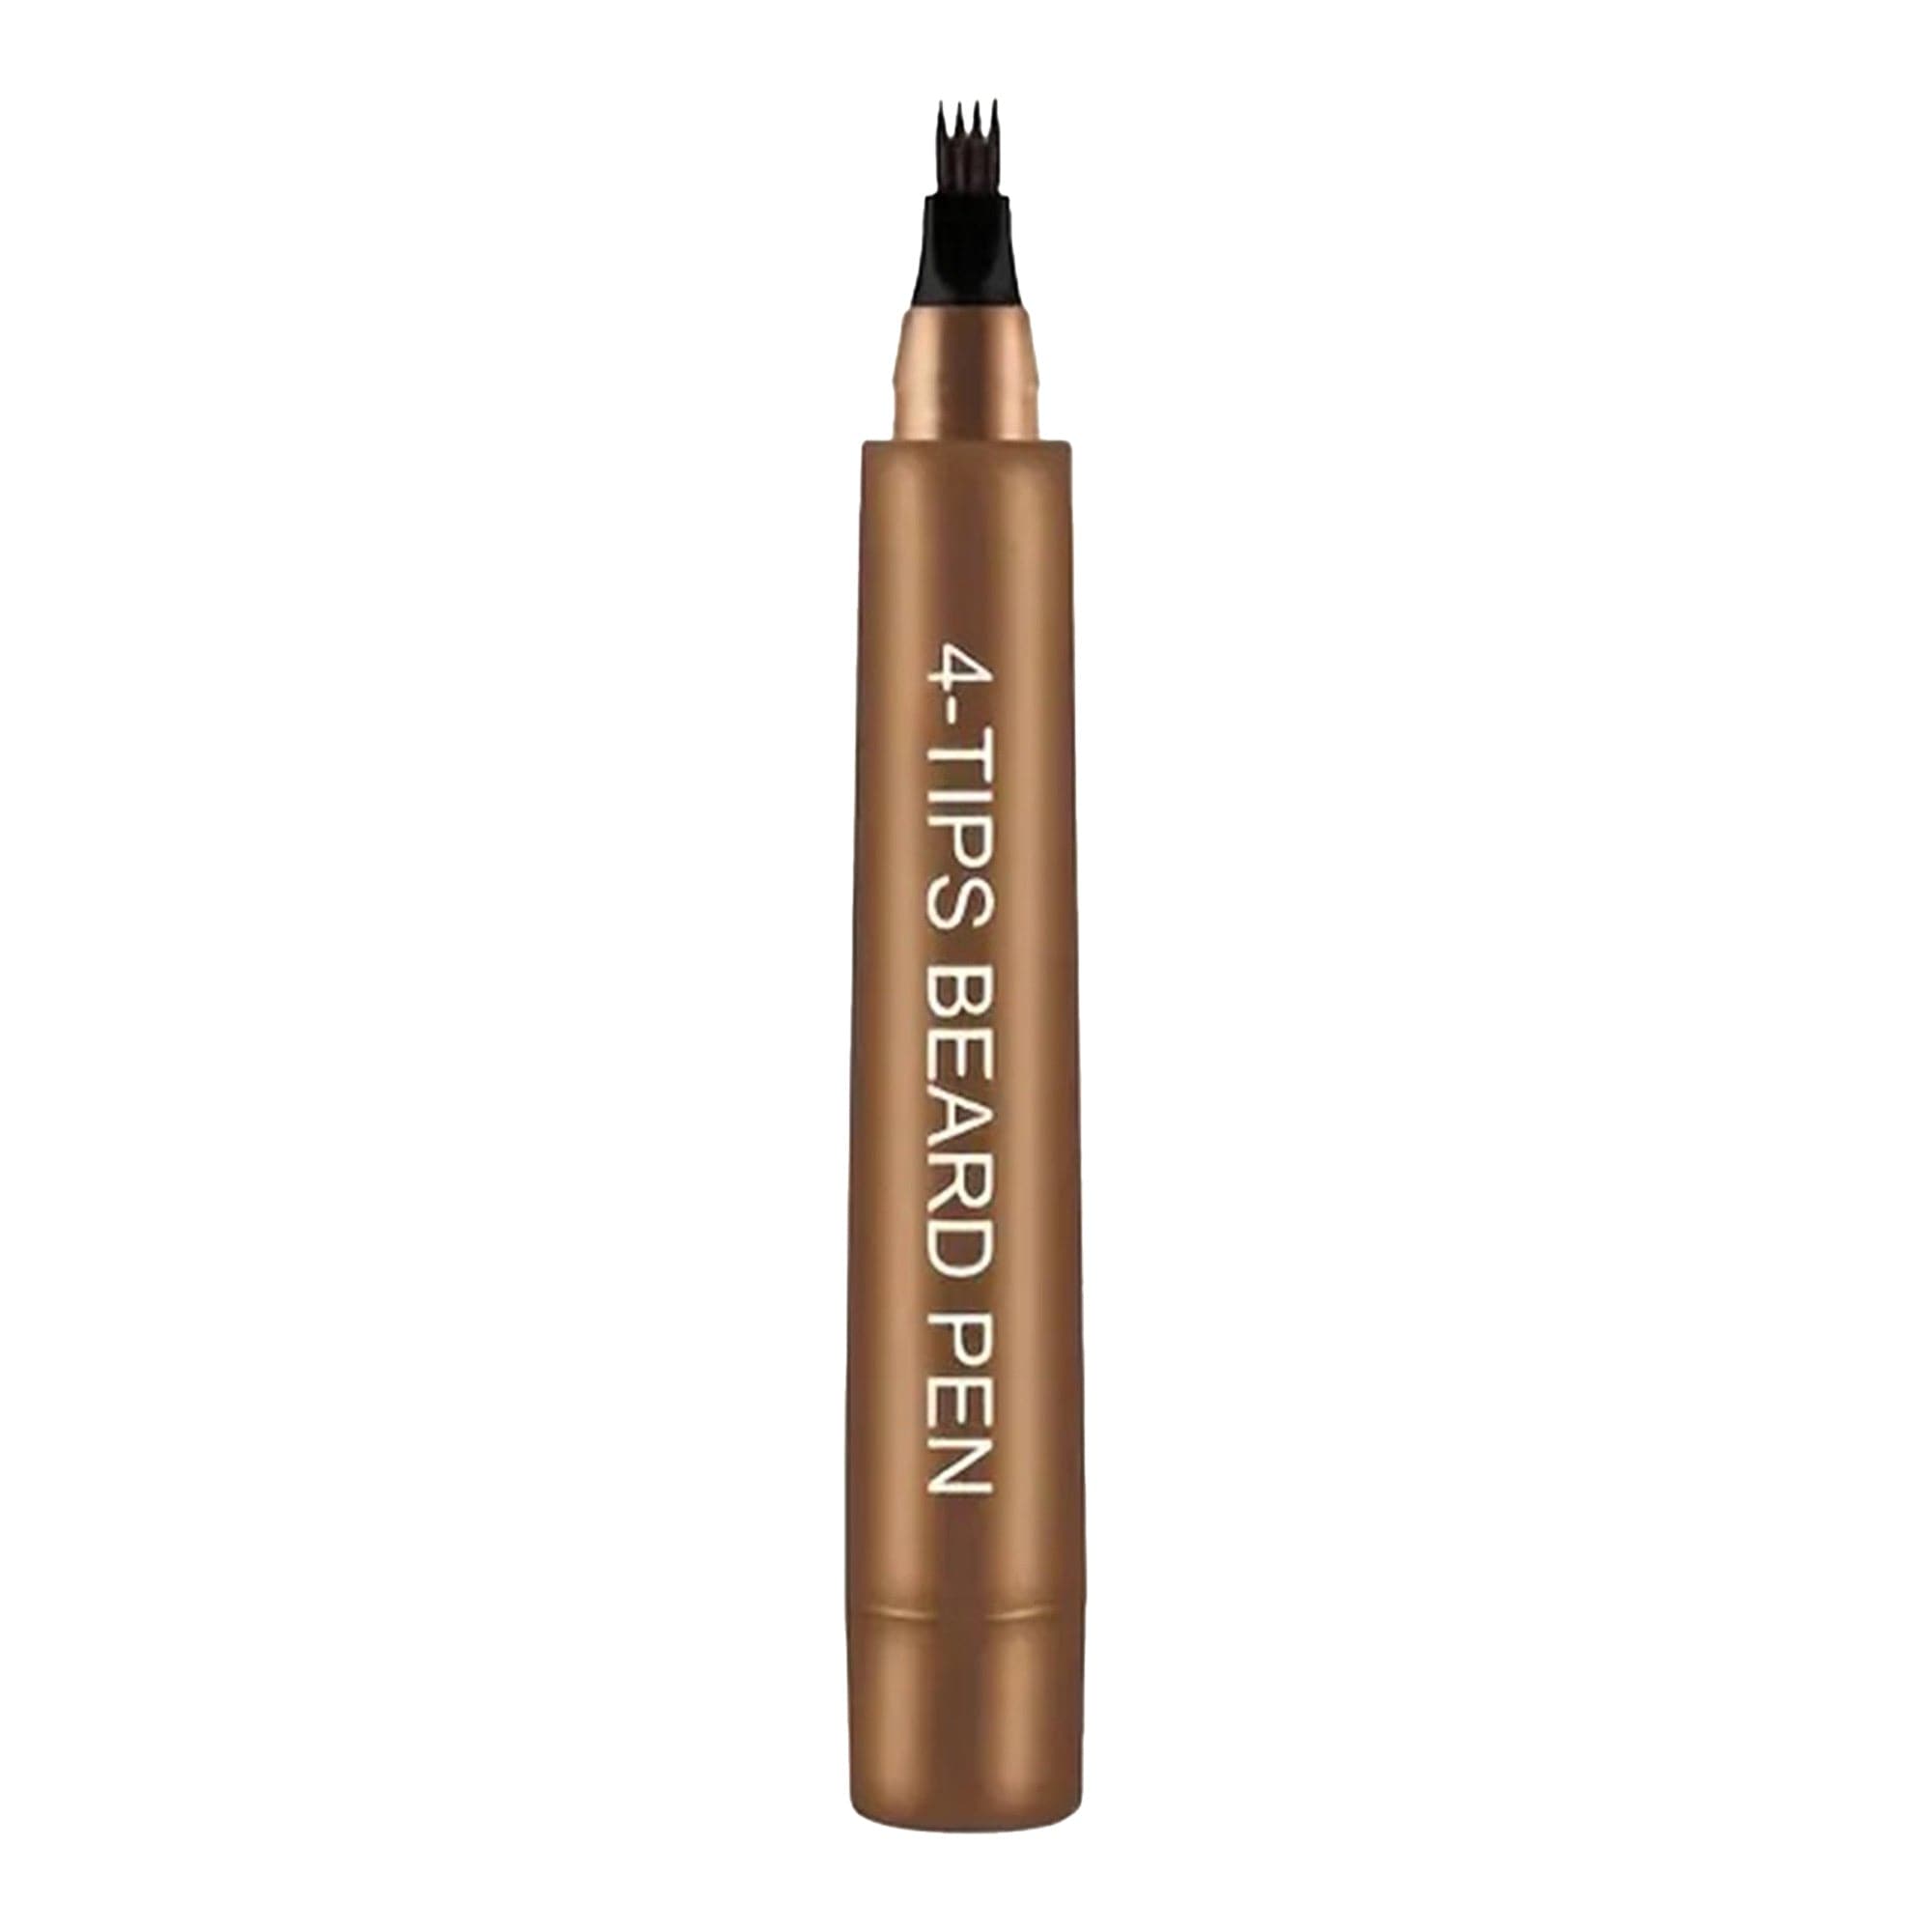 Bunee - 4-Tips Beard Pen (Brown) 5g - Eson Direct